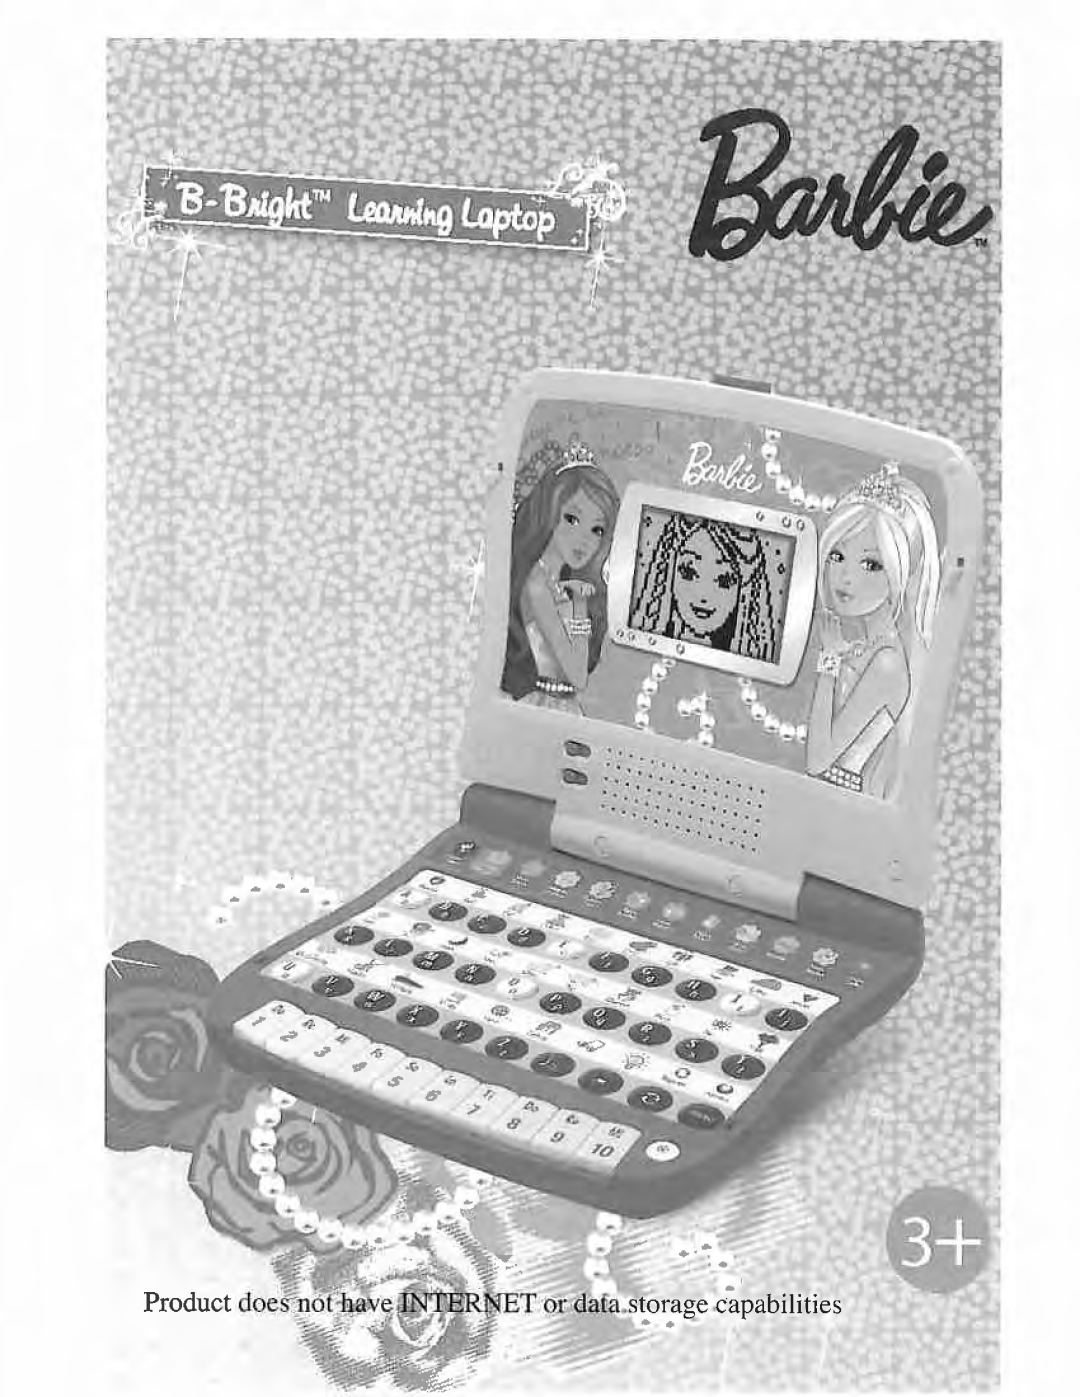 Oregon Scientific Barbie B-Brite Learning Laptop, 300102544-00001-10 manual 